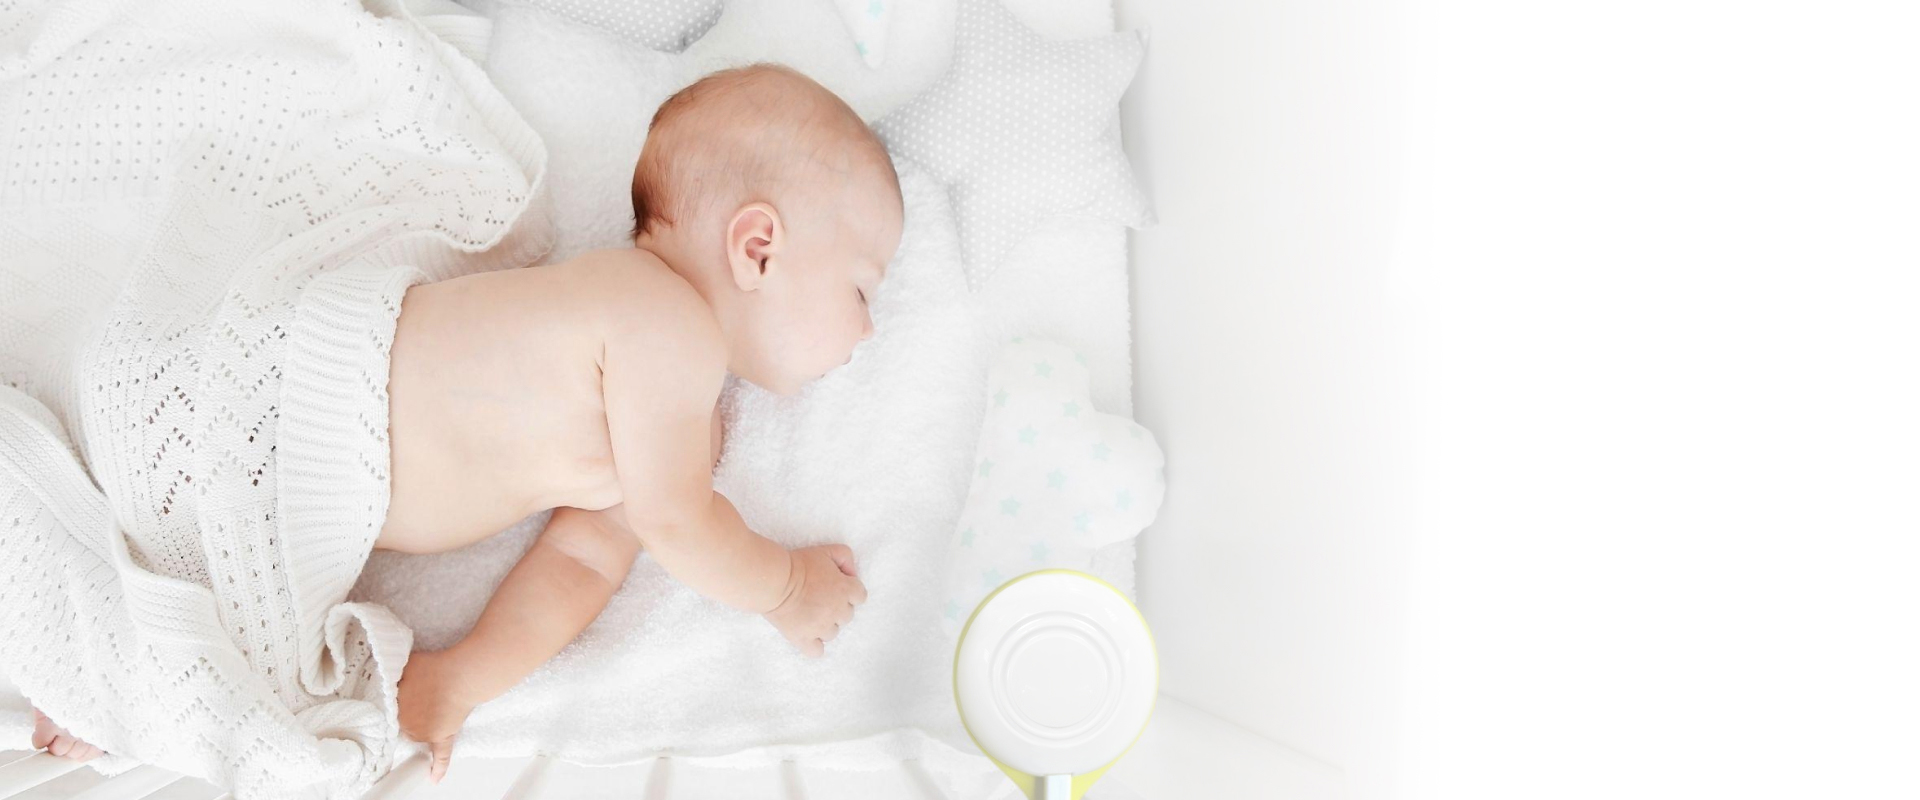 Lollipop - Australia's Top Rated Baby Monitors